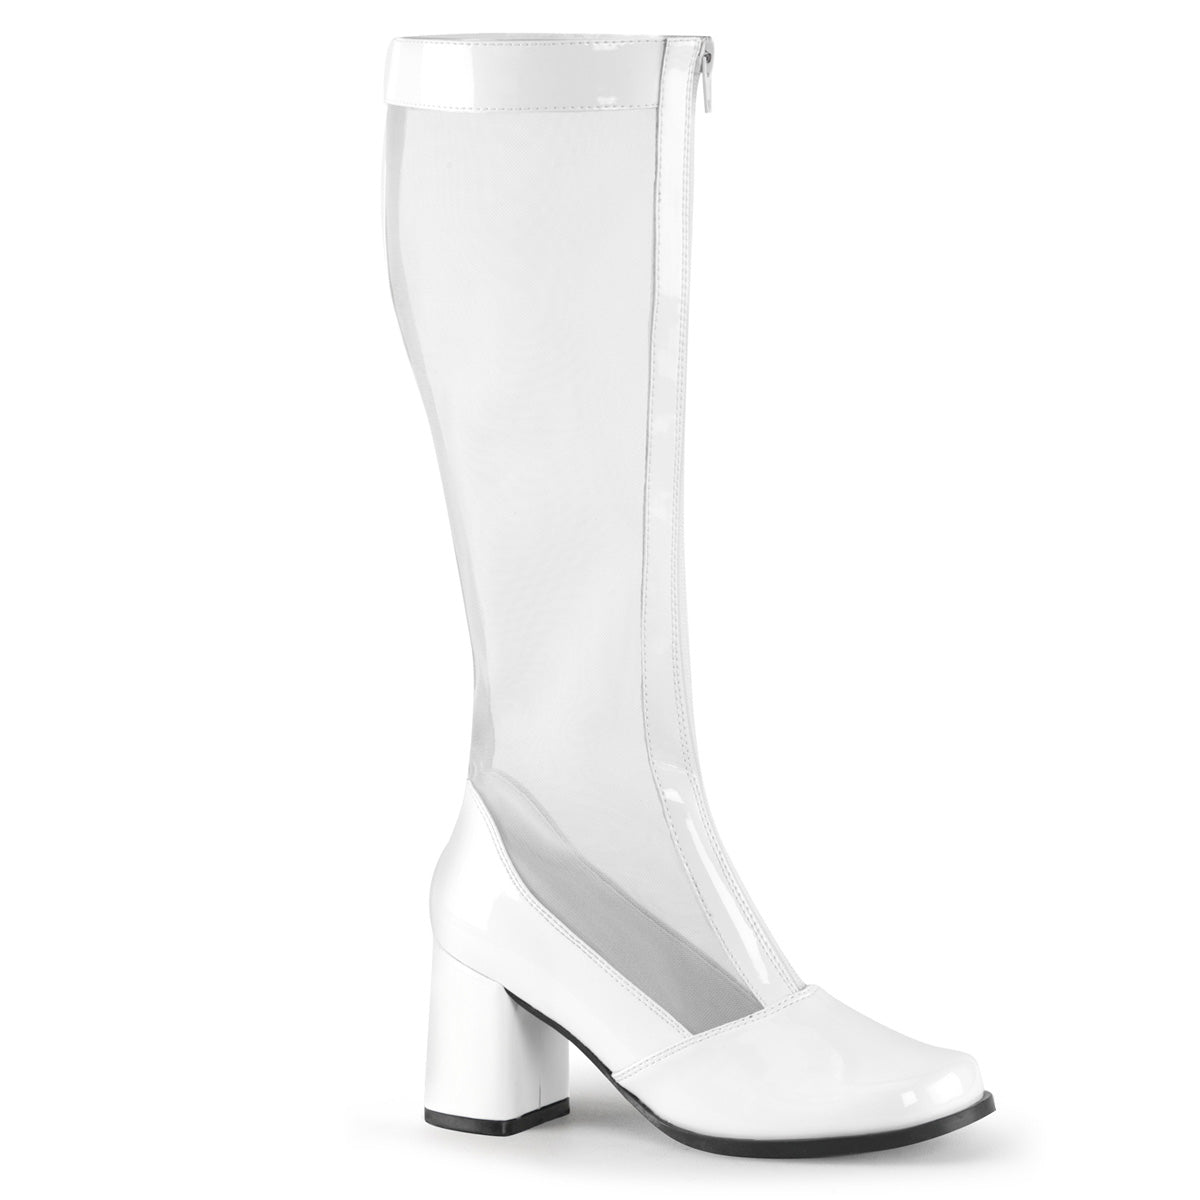 GOGO-307 3 Inch Heel White Women's Boots Funtasma Costume Shoes